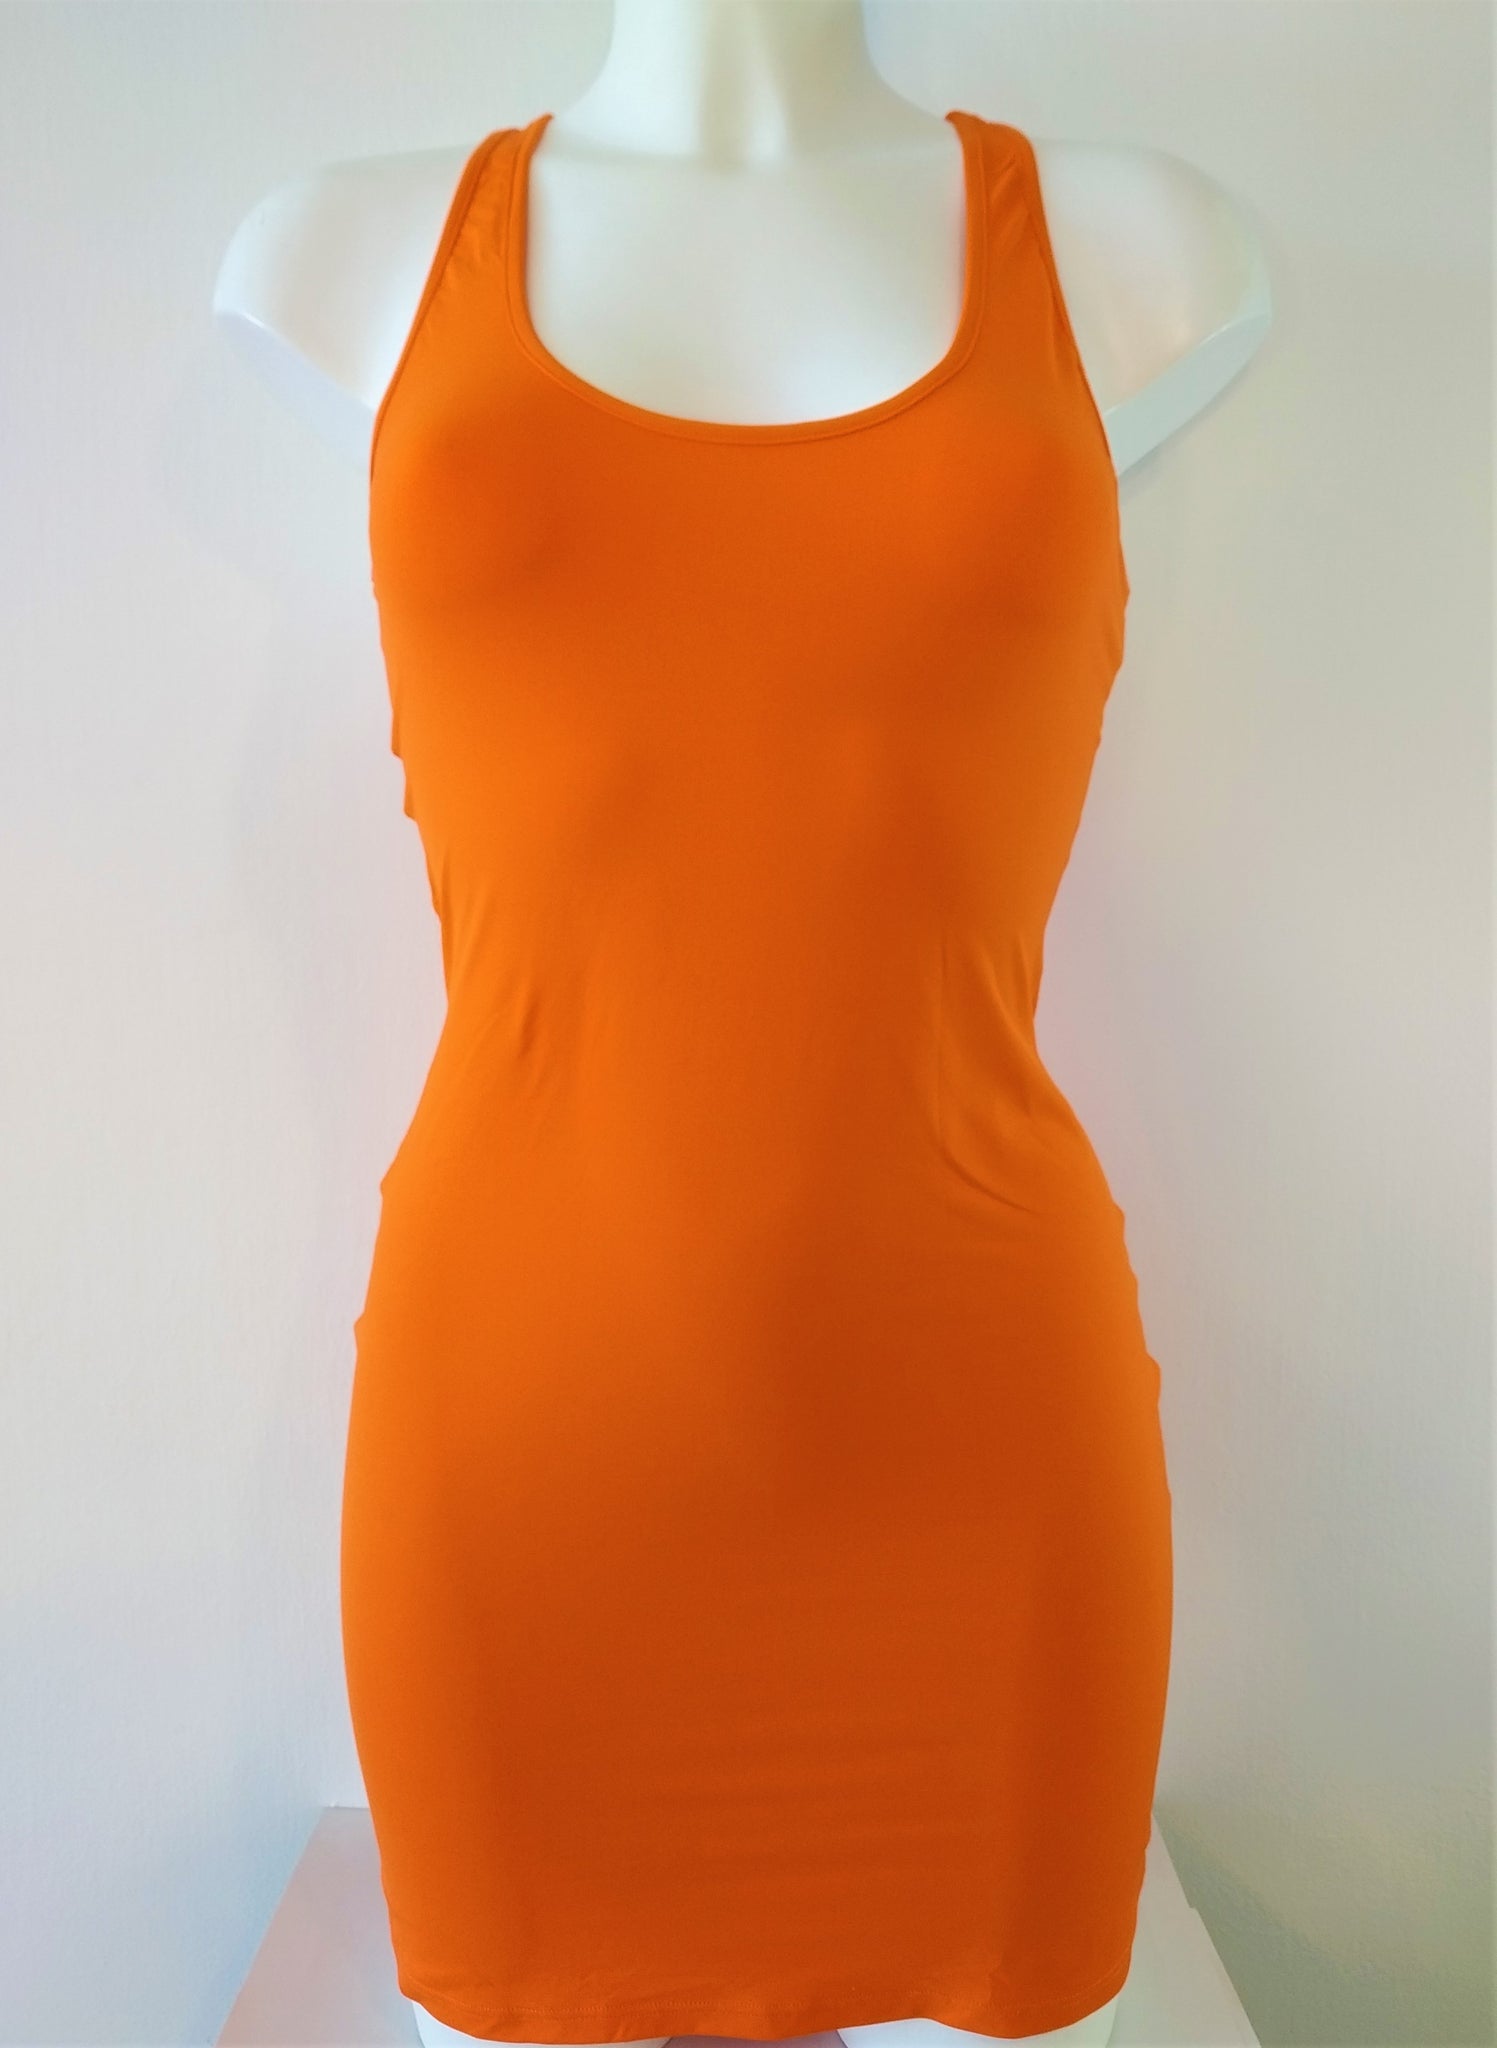 orange lycra tank dress slim cut, mini,tight on the body, 4 colors: hot pink, black, blue, orange. bikinn.com